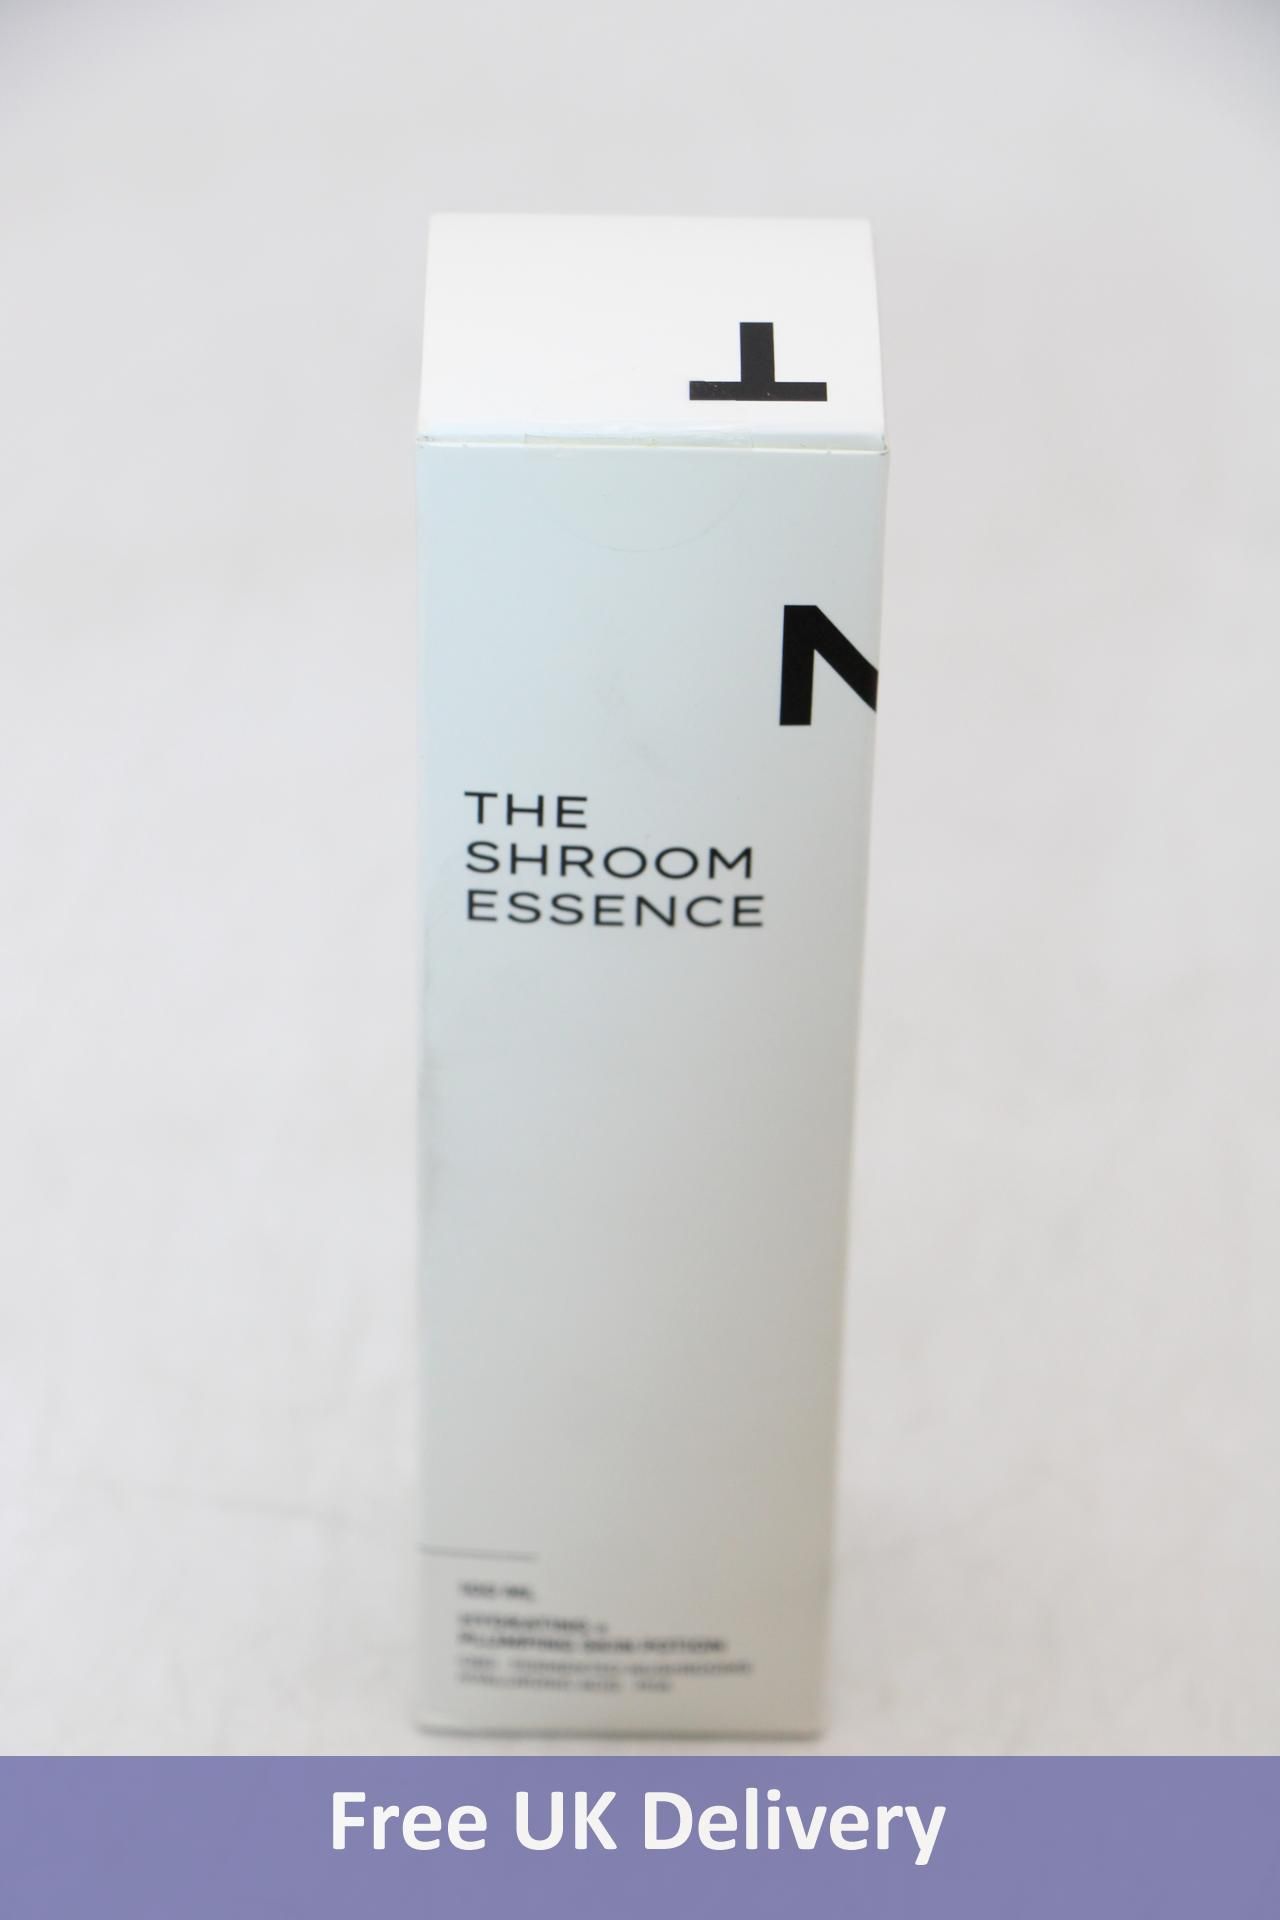 Ten Mantle The Shroom Essence Bottle Hydrating x Plumping Skin Potion Cbd, Size 100ml - Image 6 of 10